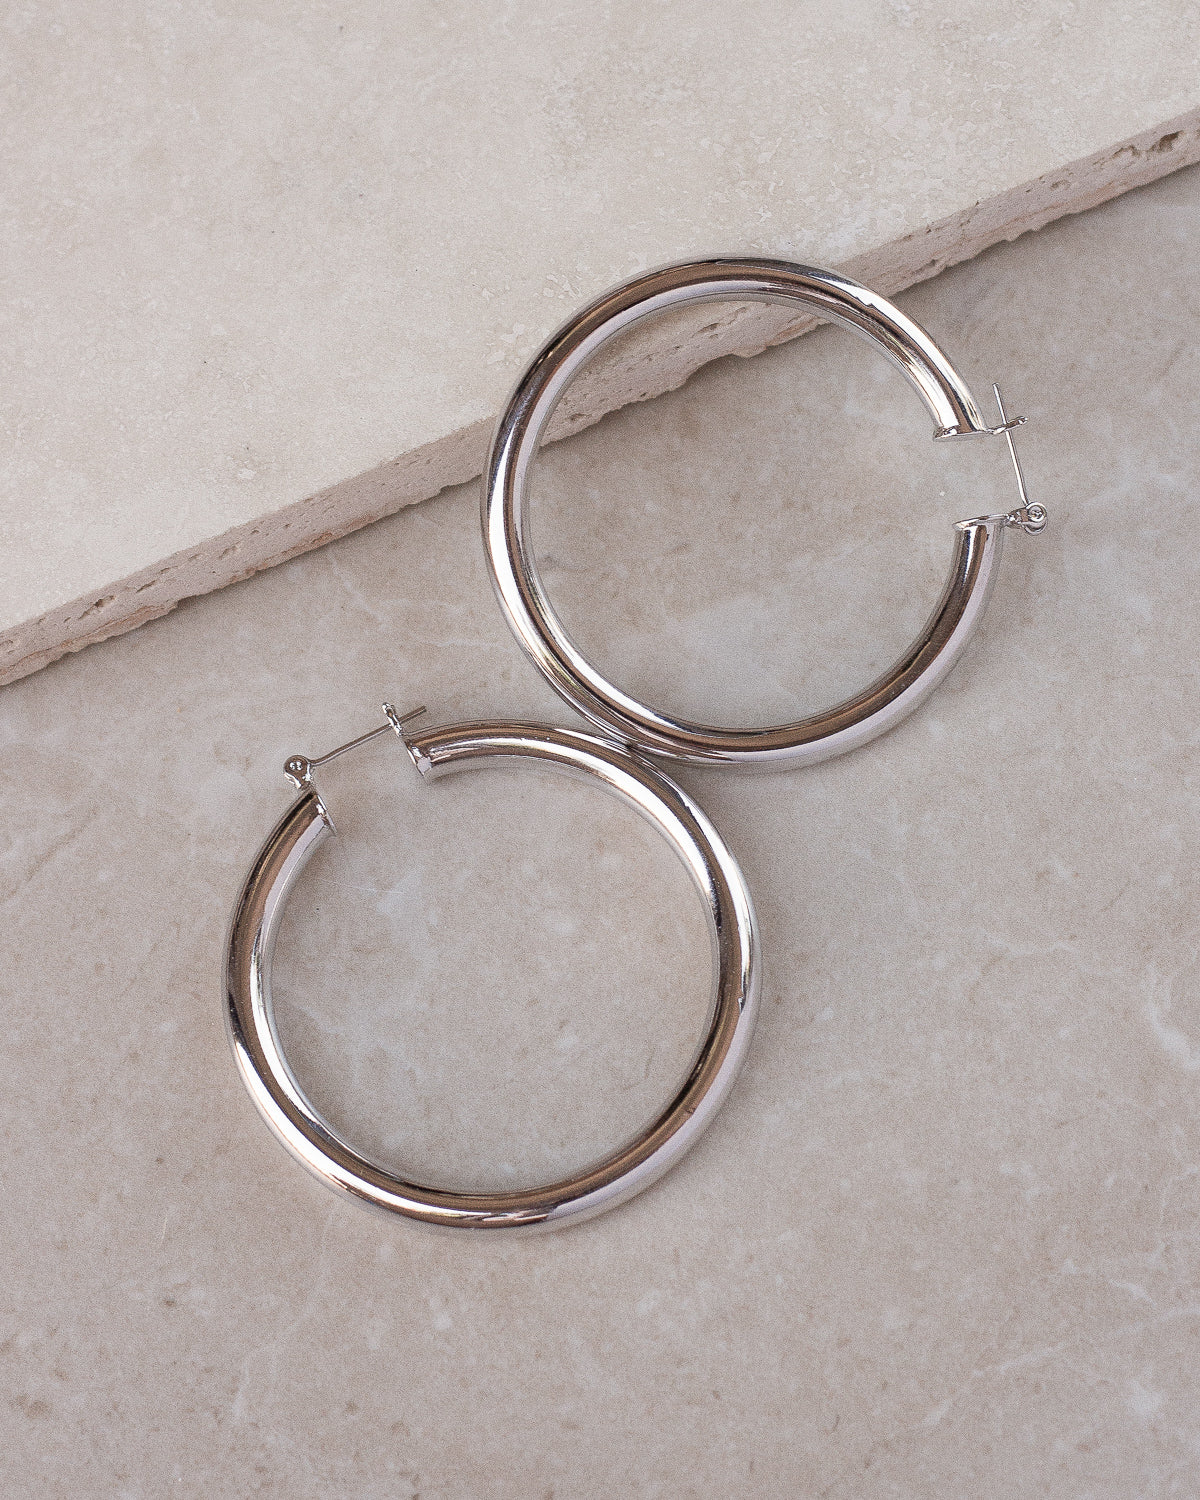 Luv Aj Amalfi Tube Hoop Earrings in Polished Rhodium Plated